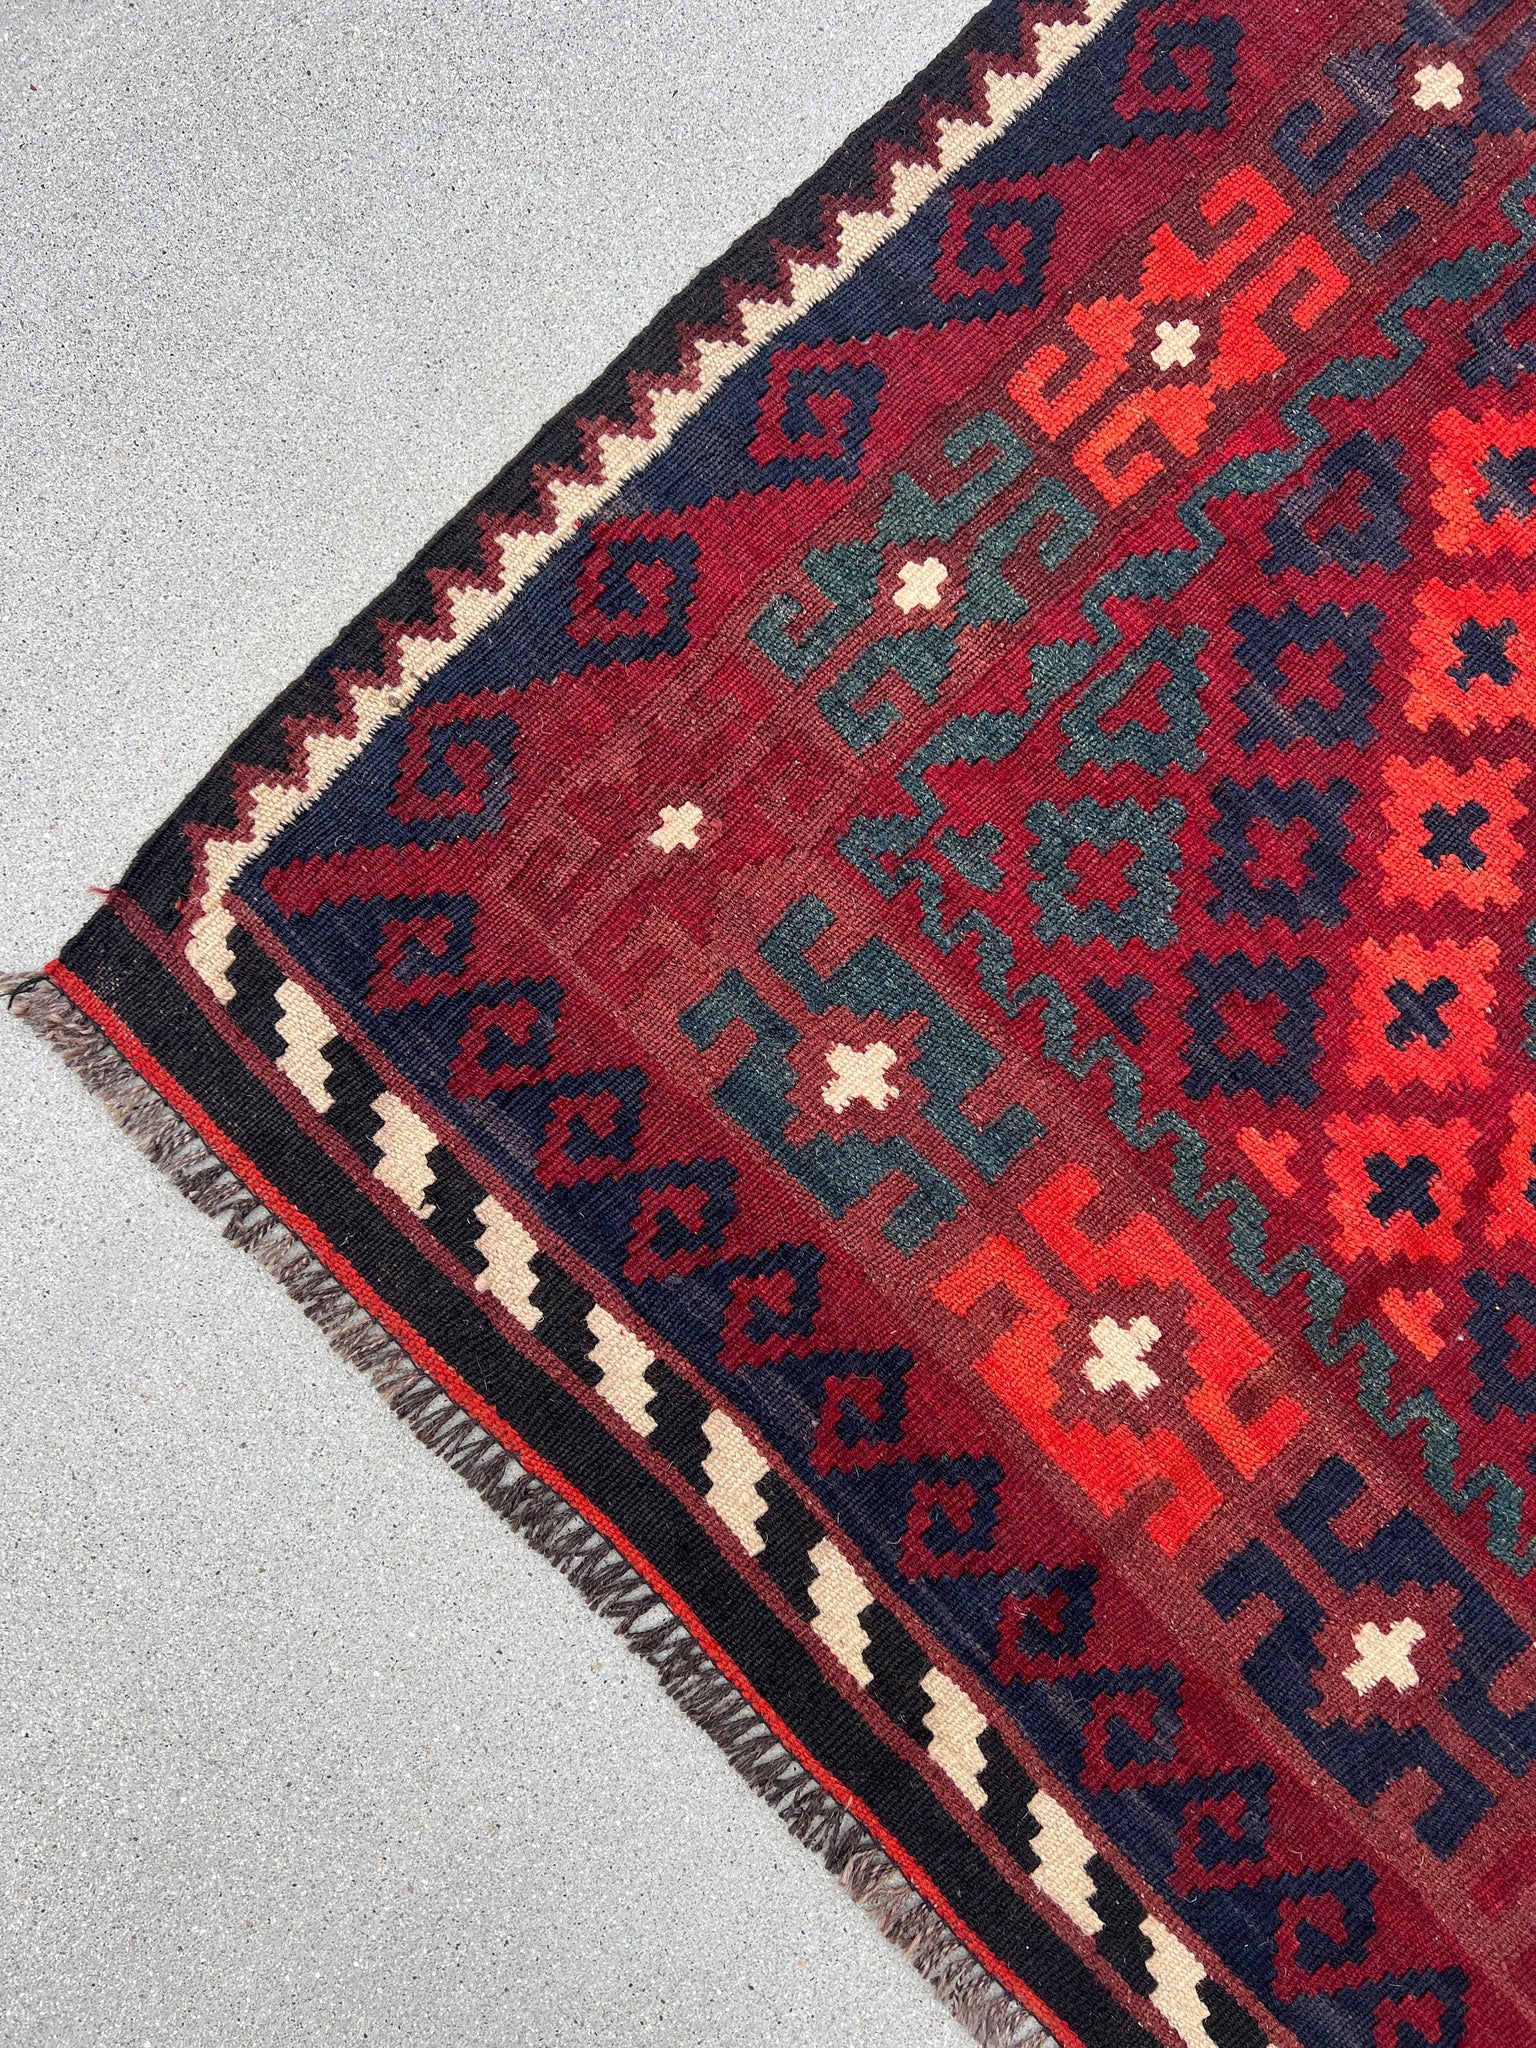 3x6 (90x180) Handmade Vintage Kilim Afghan Rug | Brick Scarlet Red Midnight Blue Black Cream Beige | Hand Knotted Geometric Bohemian Wool